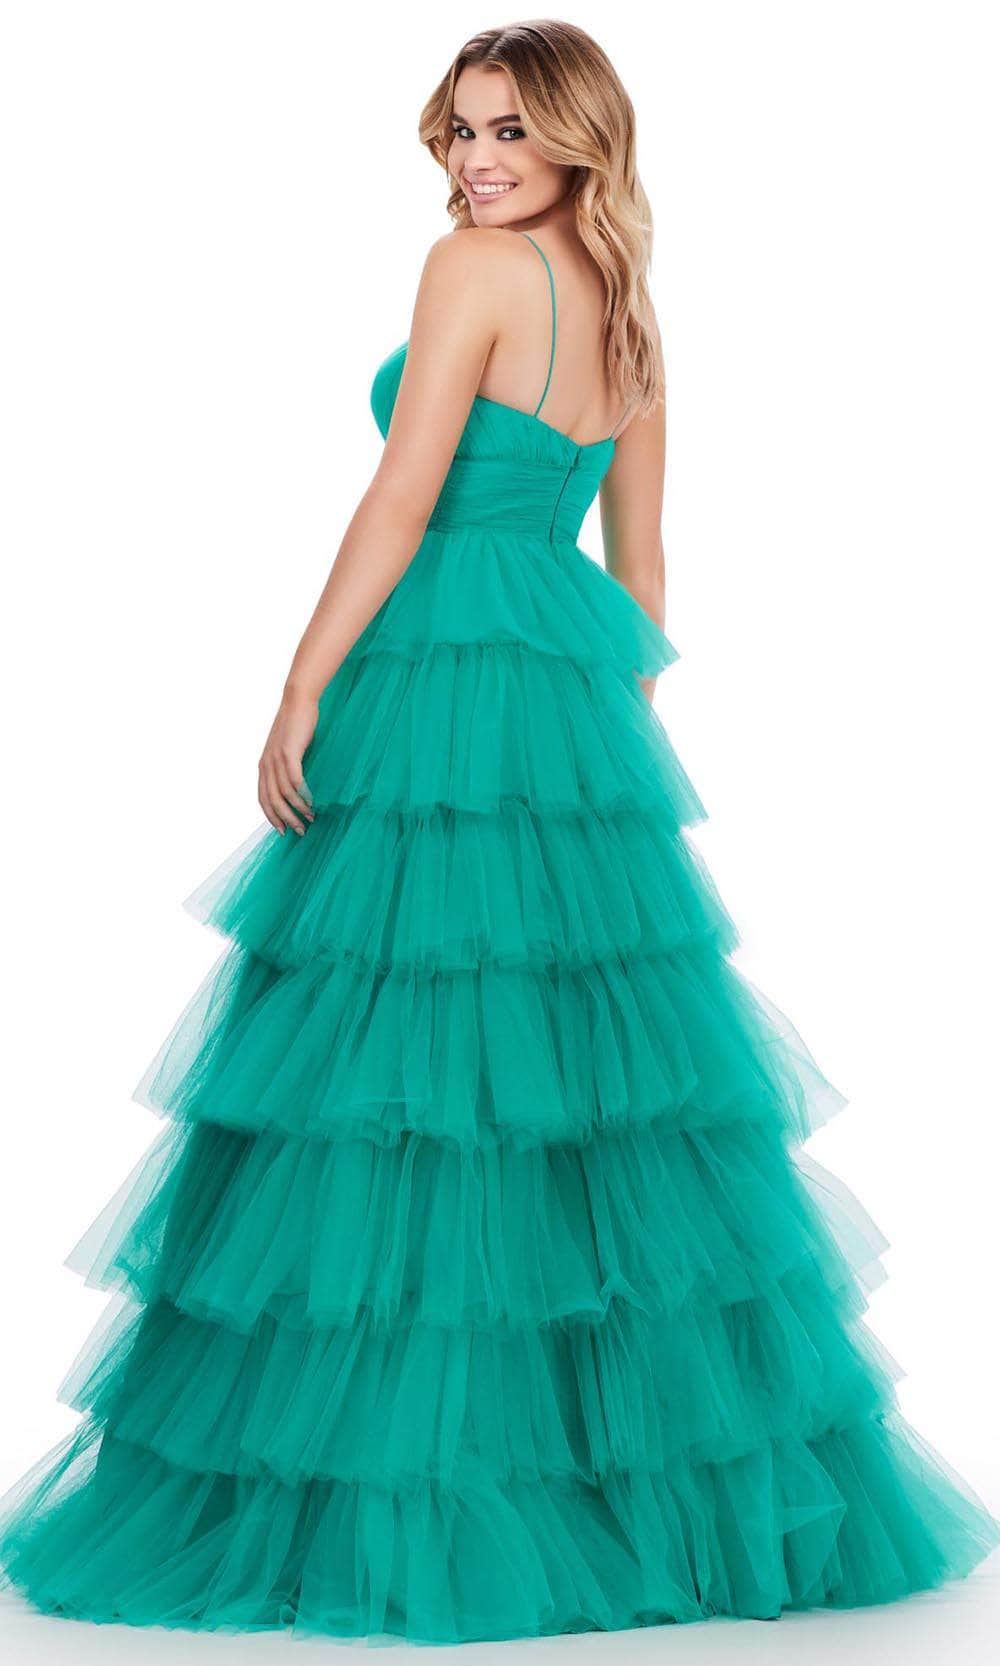 Ashley Lauren 11622 - Tiered A-Line Prom Dress Prom Dresses